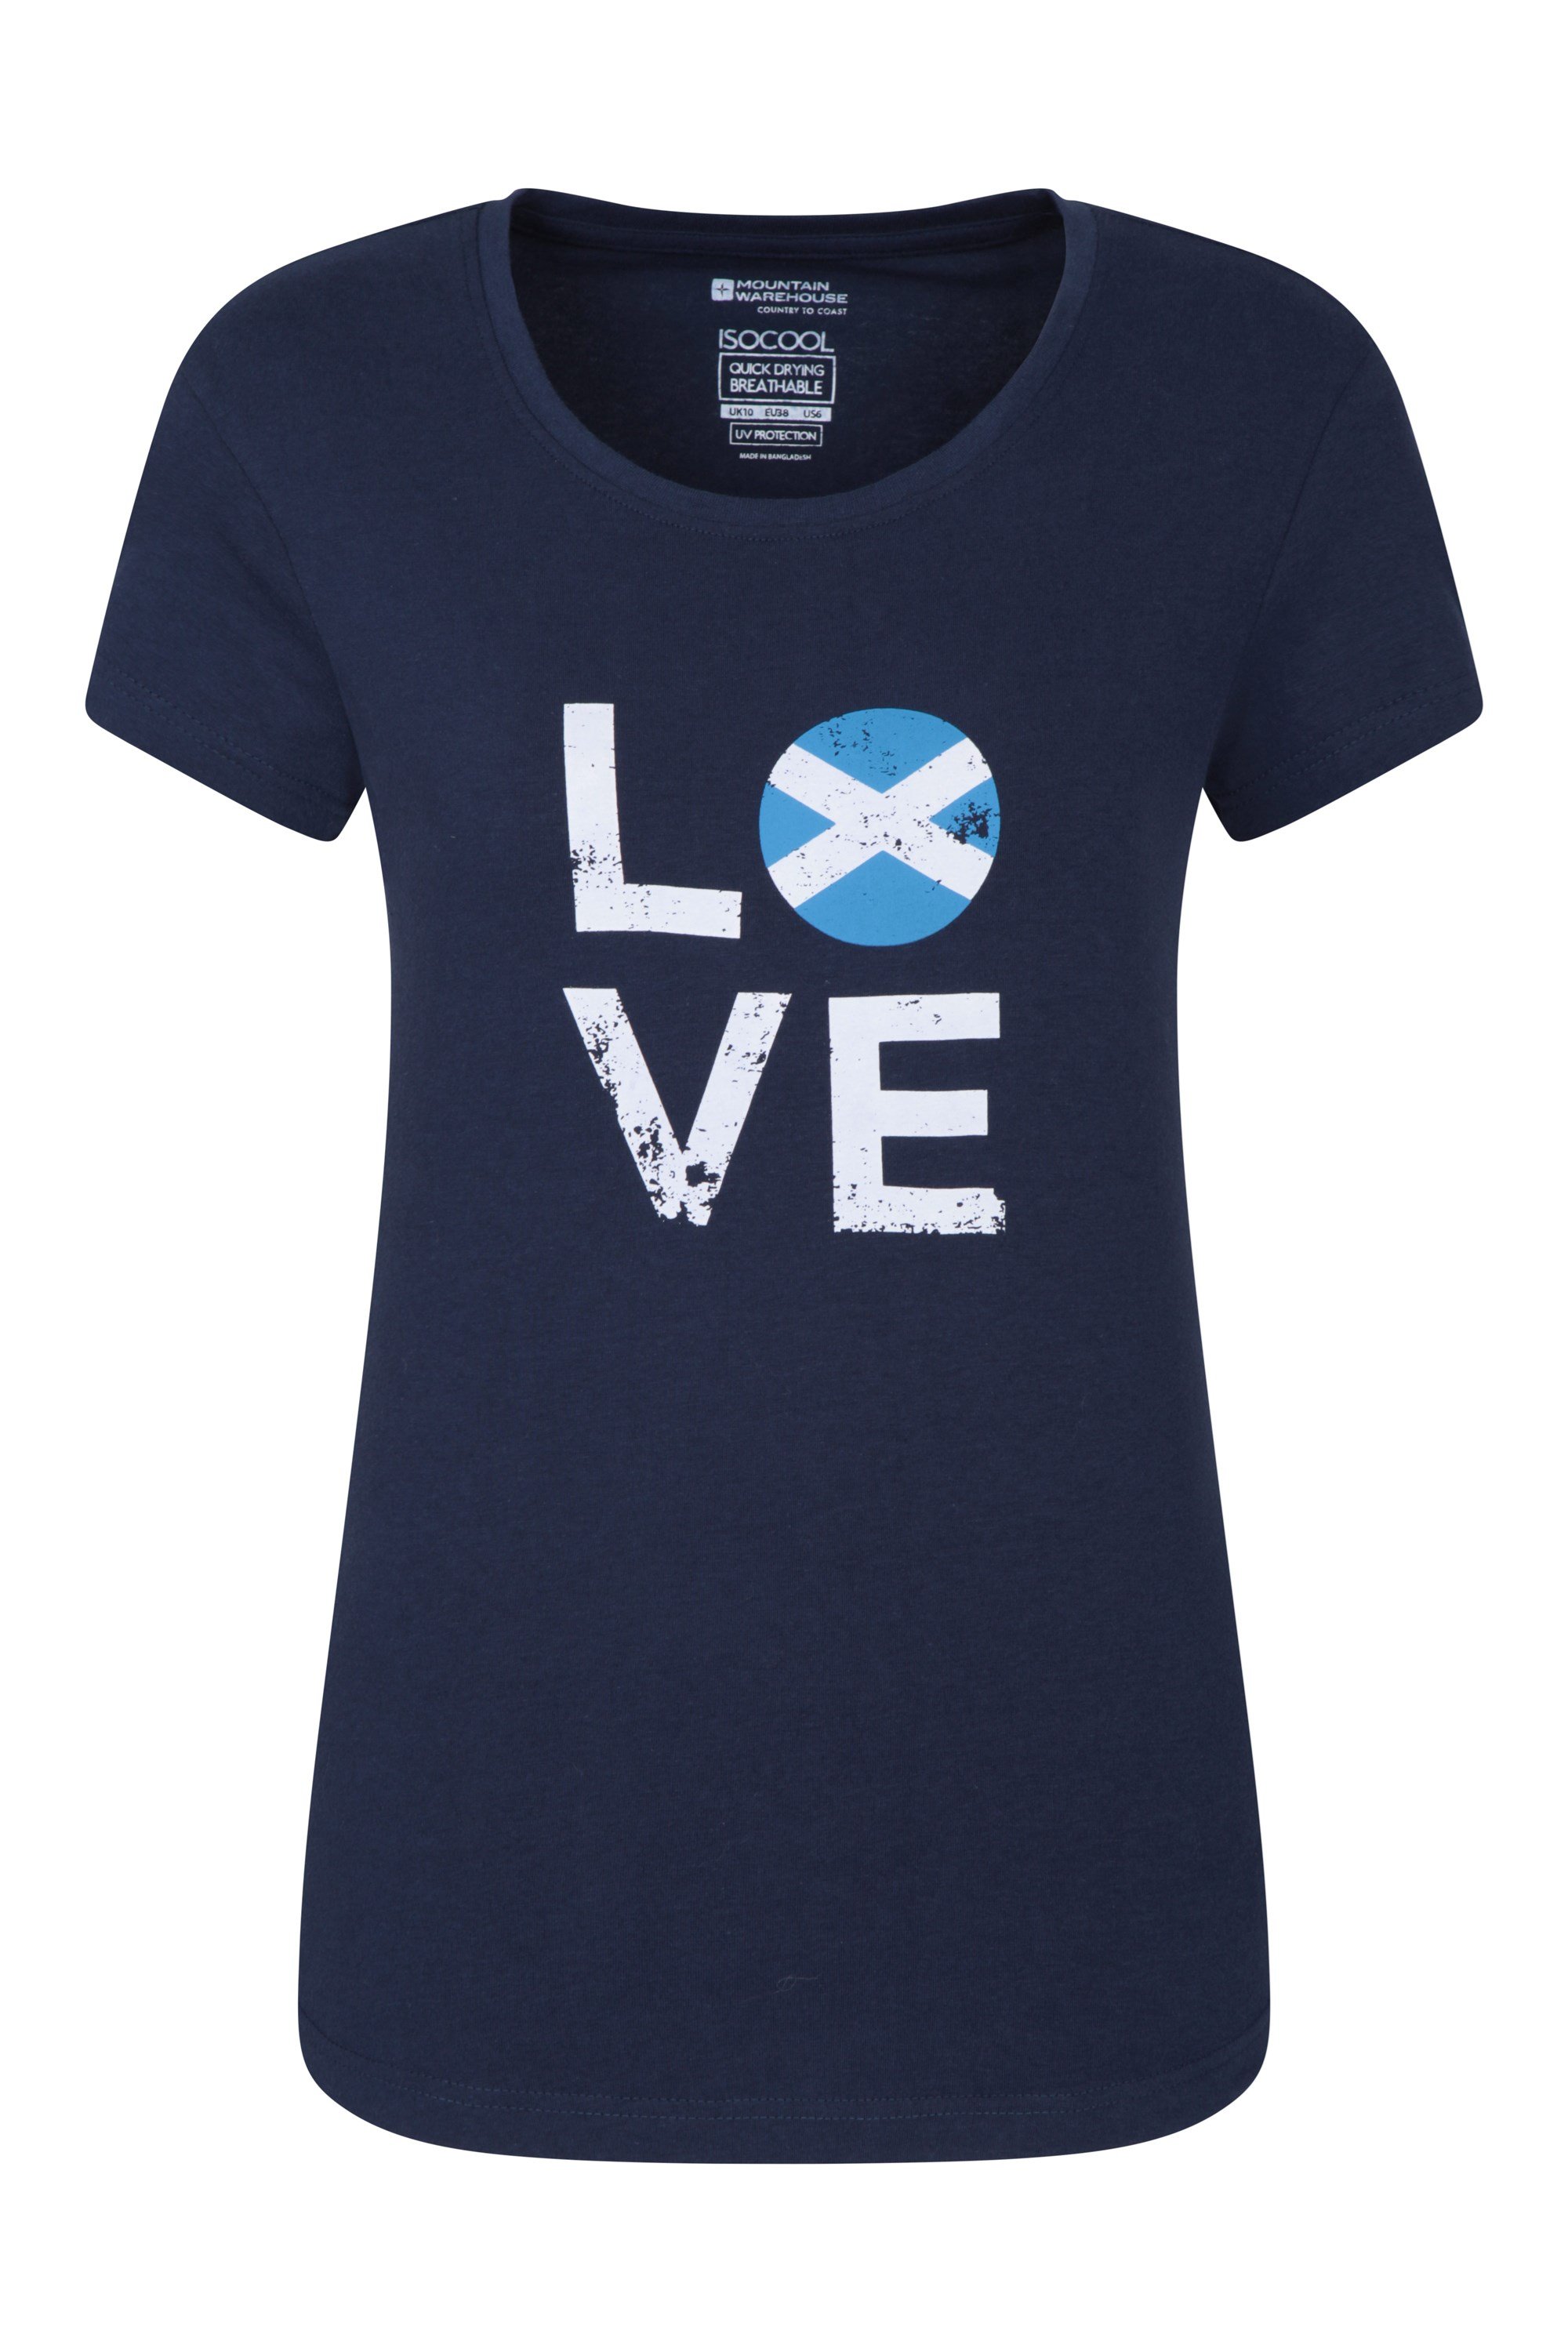 Love Scotland - koszulka damska - Navy